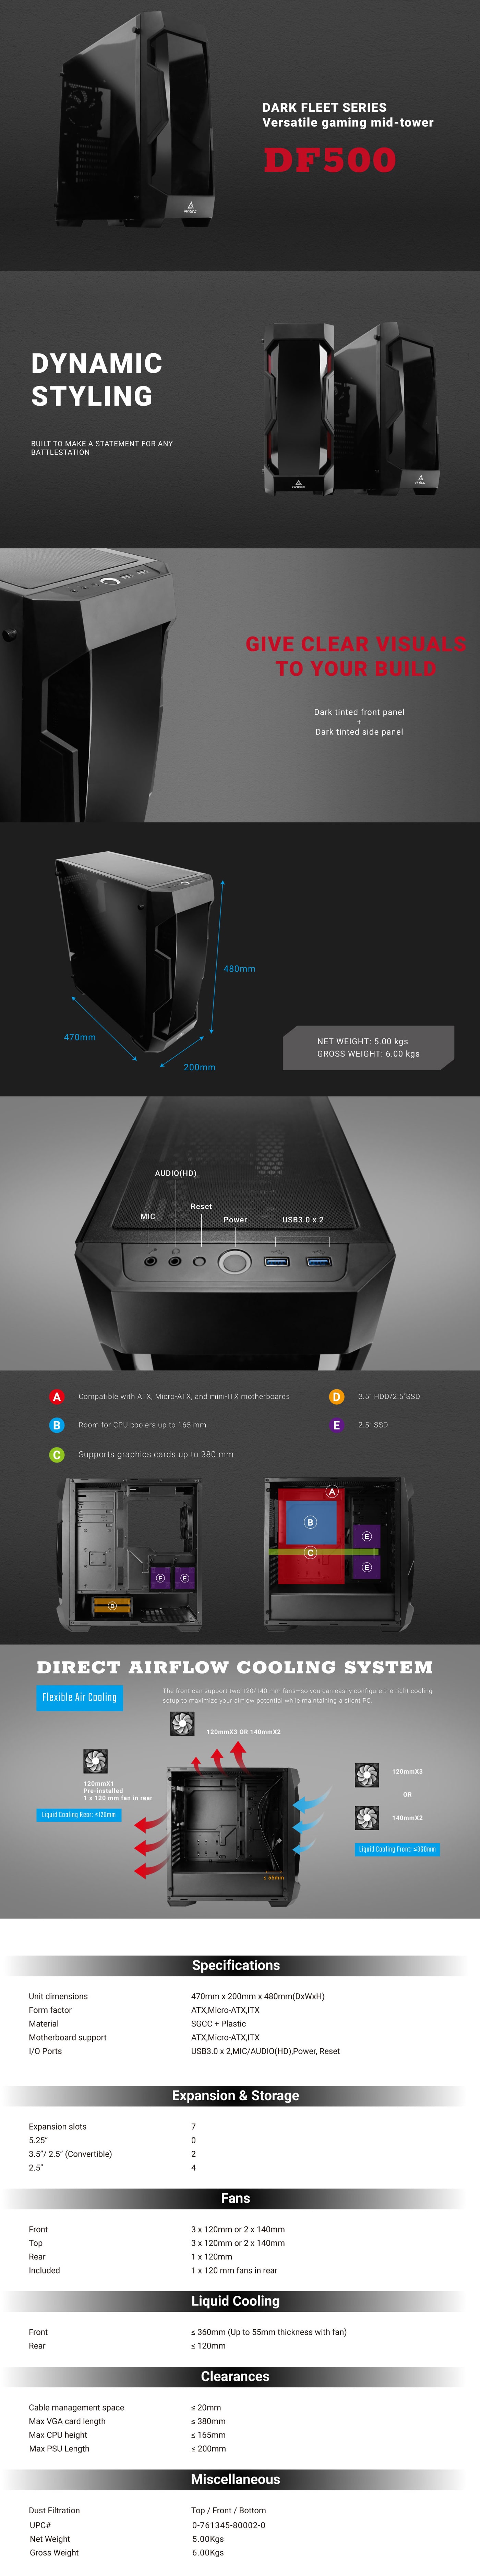 Antec DF500 Versatile Gaming Mid Tower Computer Case features